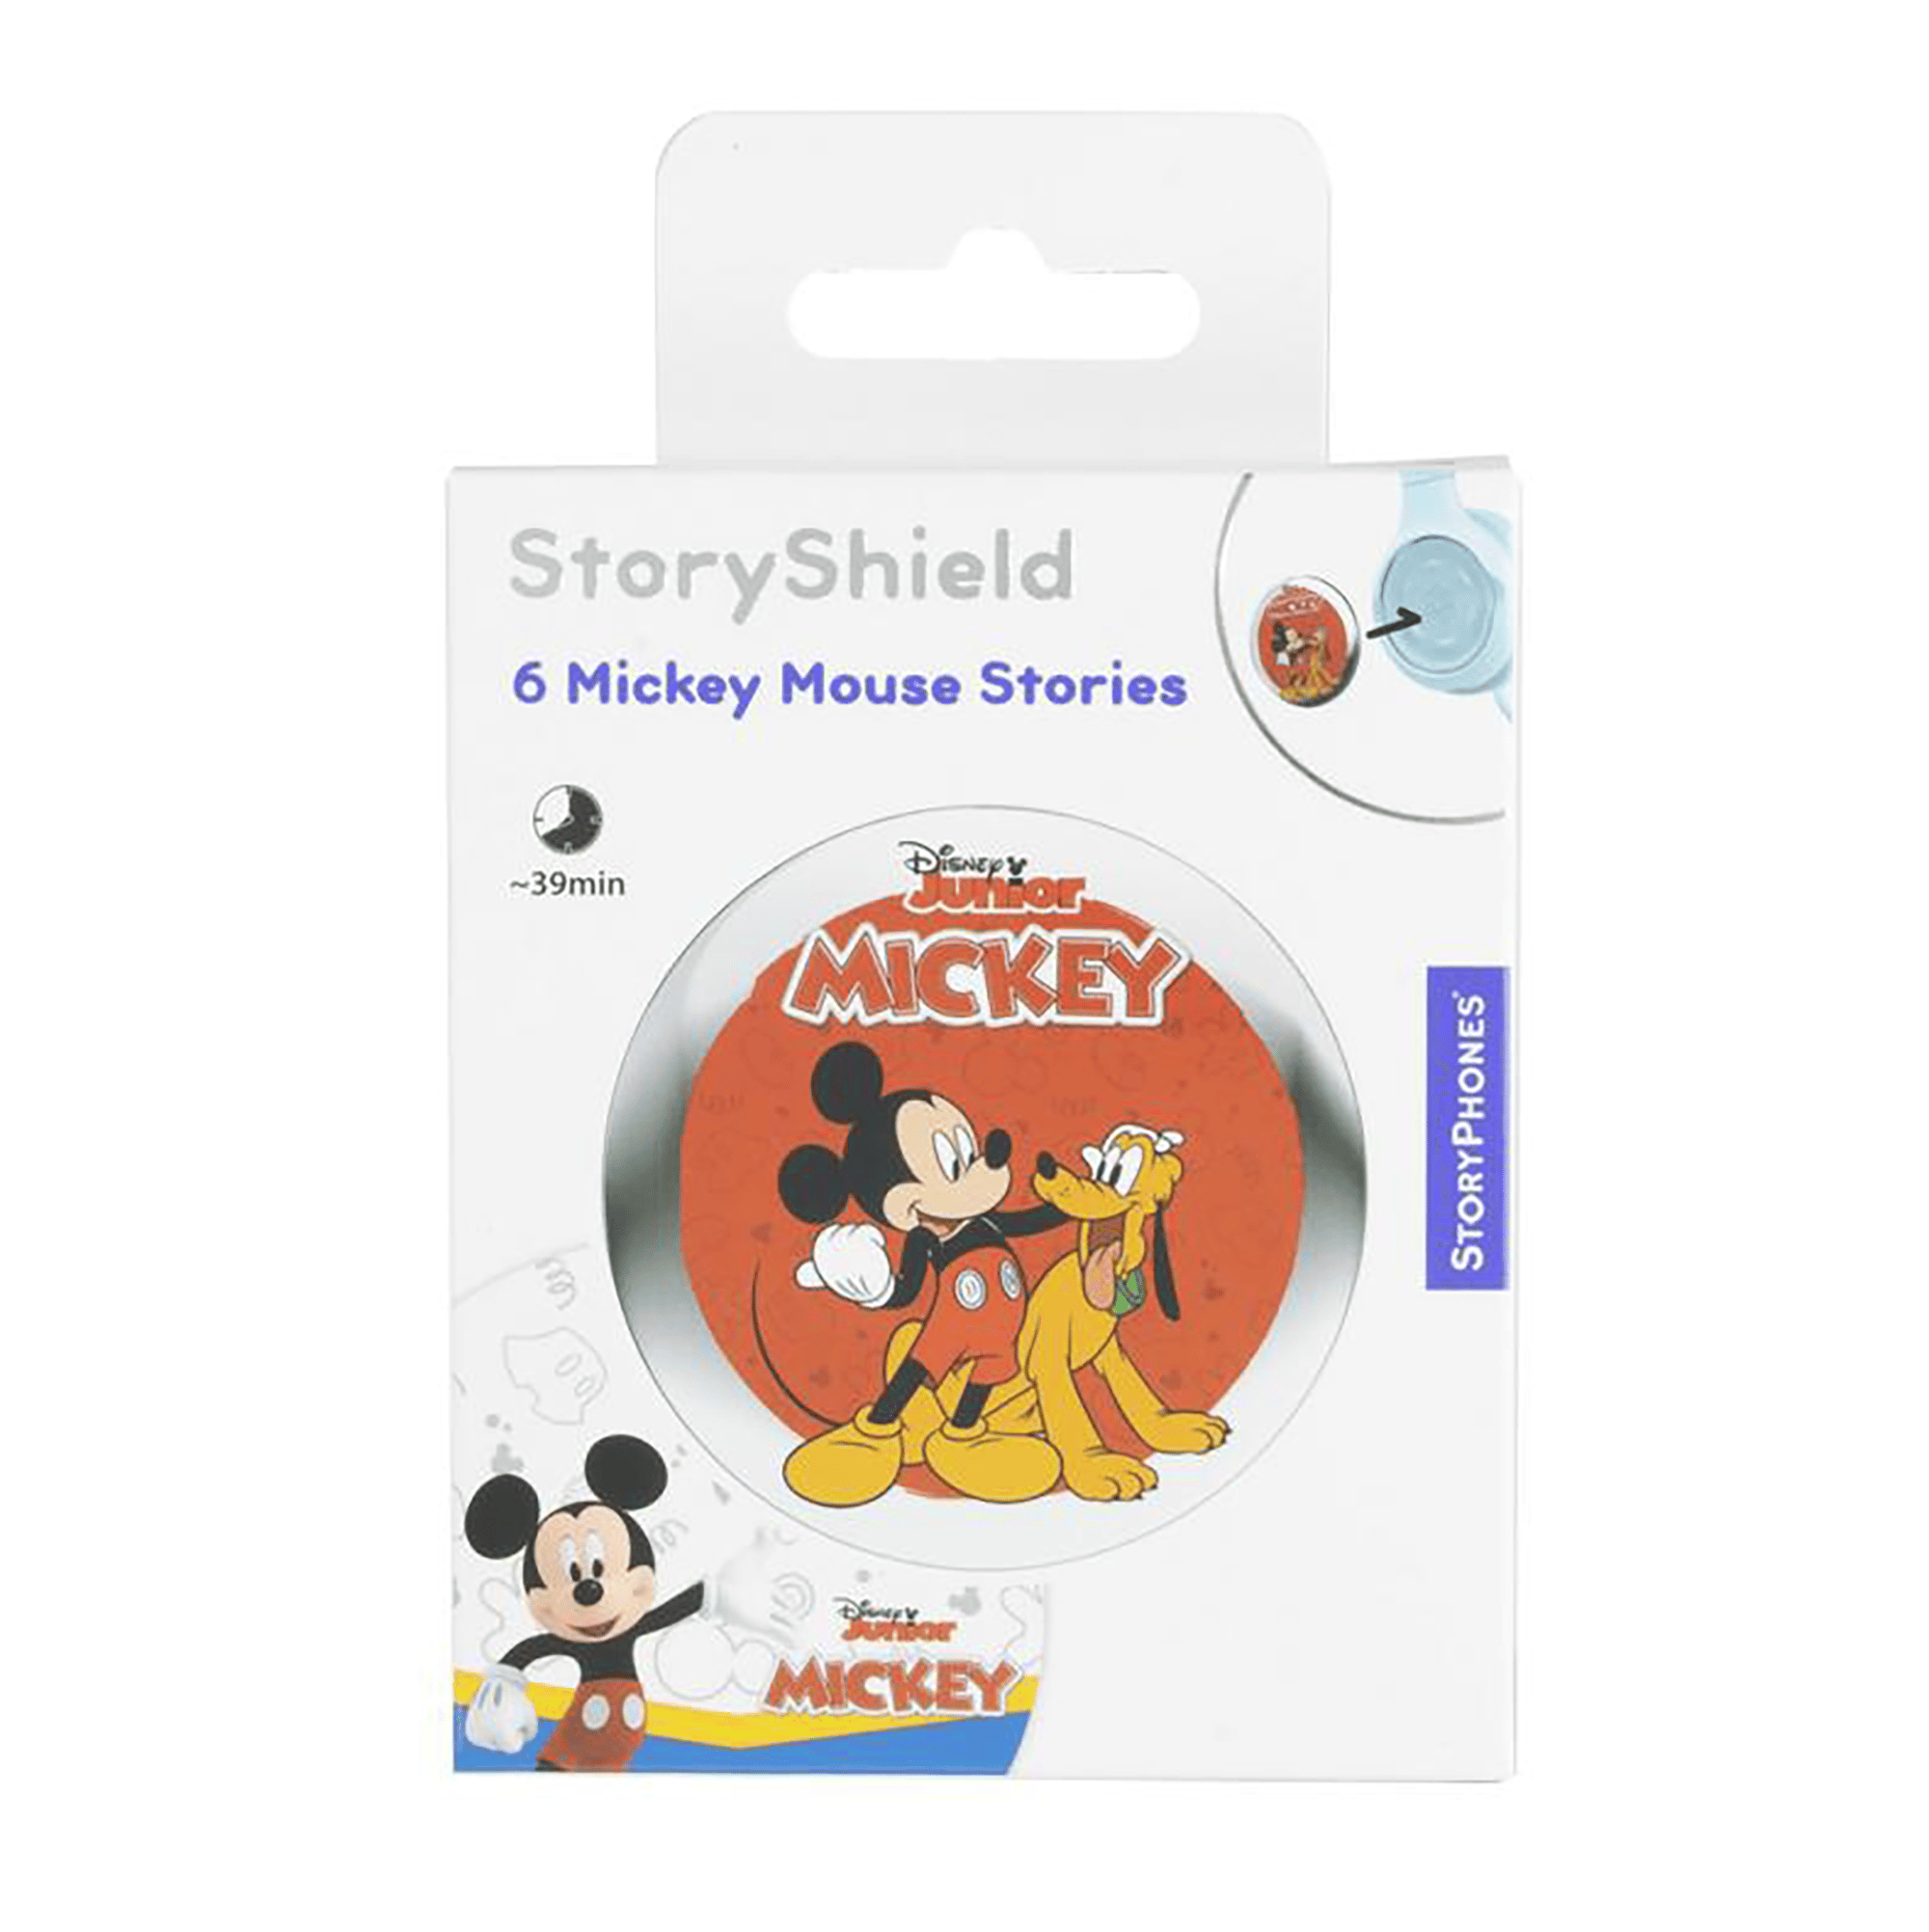 StoryShield Disney Collection - Mickey Mouse onanoff Rot 2000583661405 2